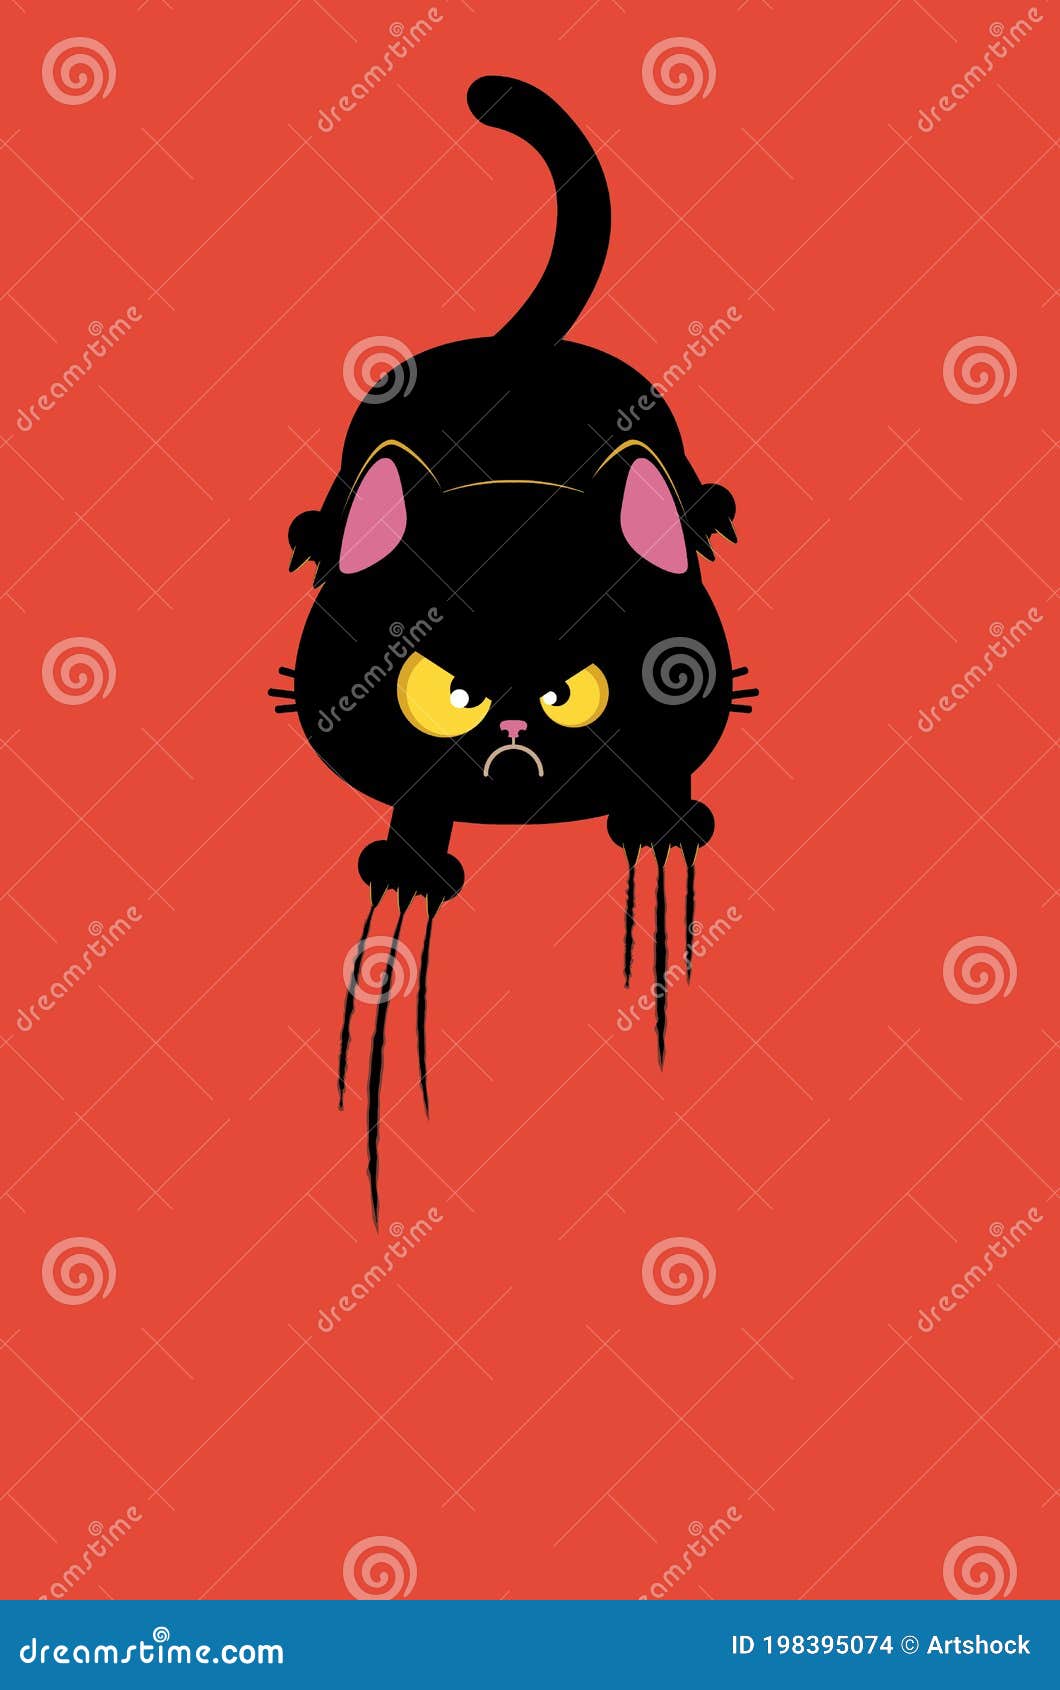 Desenho de Gato Preto pintado e colorido por Rafacorrei o dia 15 de  Fevereiro do 2013